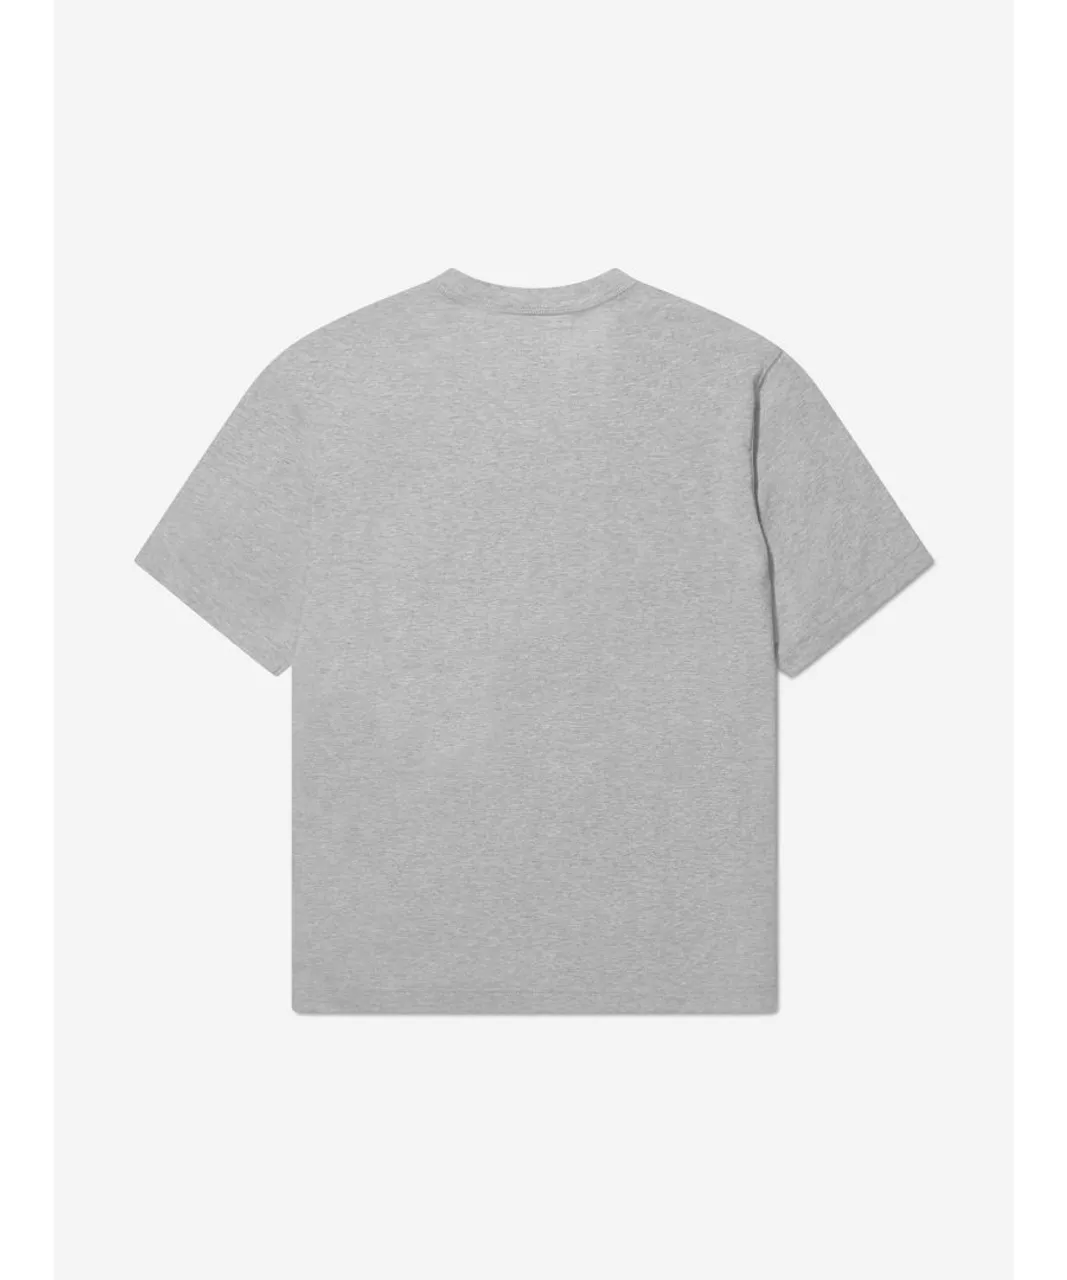 MYAR Boys Cotton Logo T-Shirt - Grey